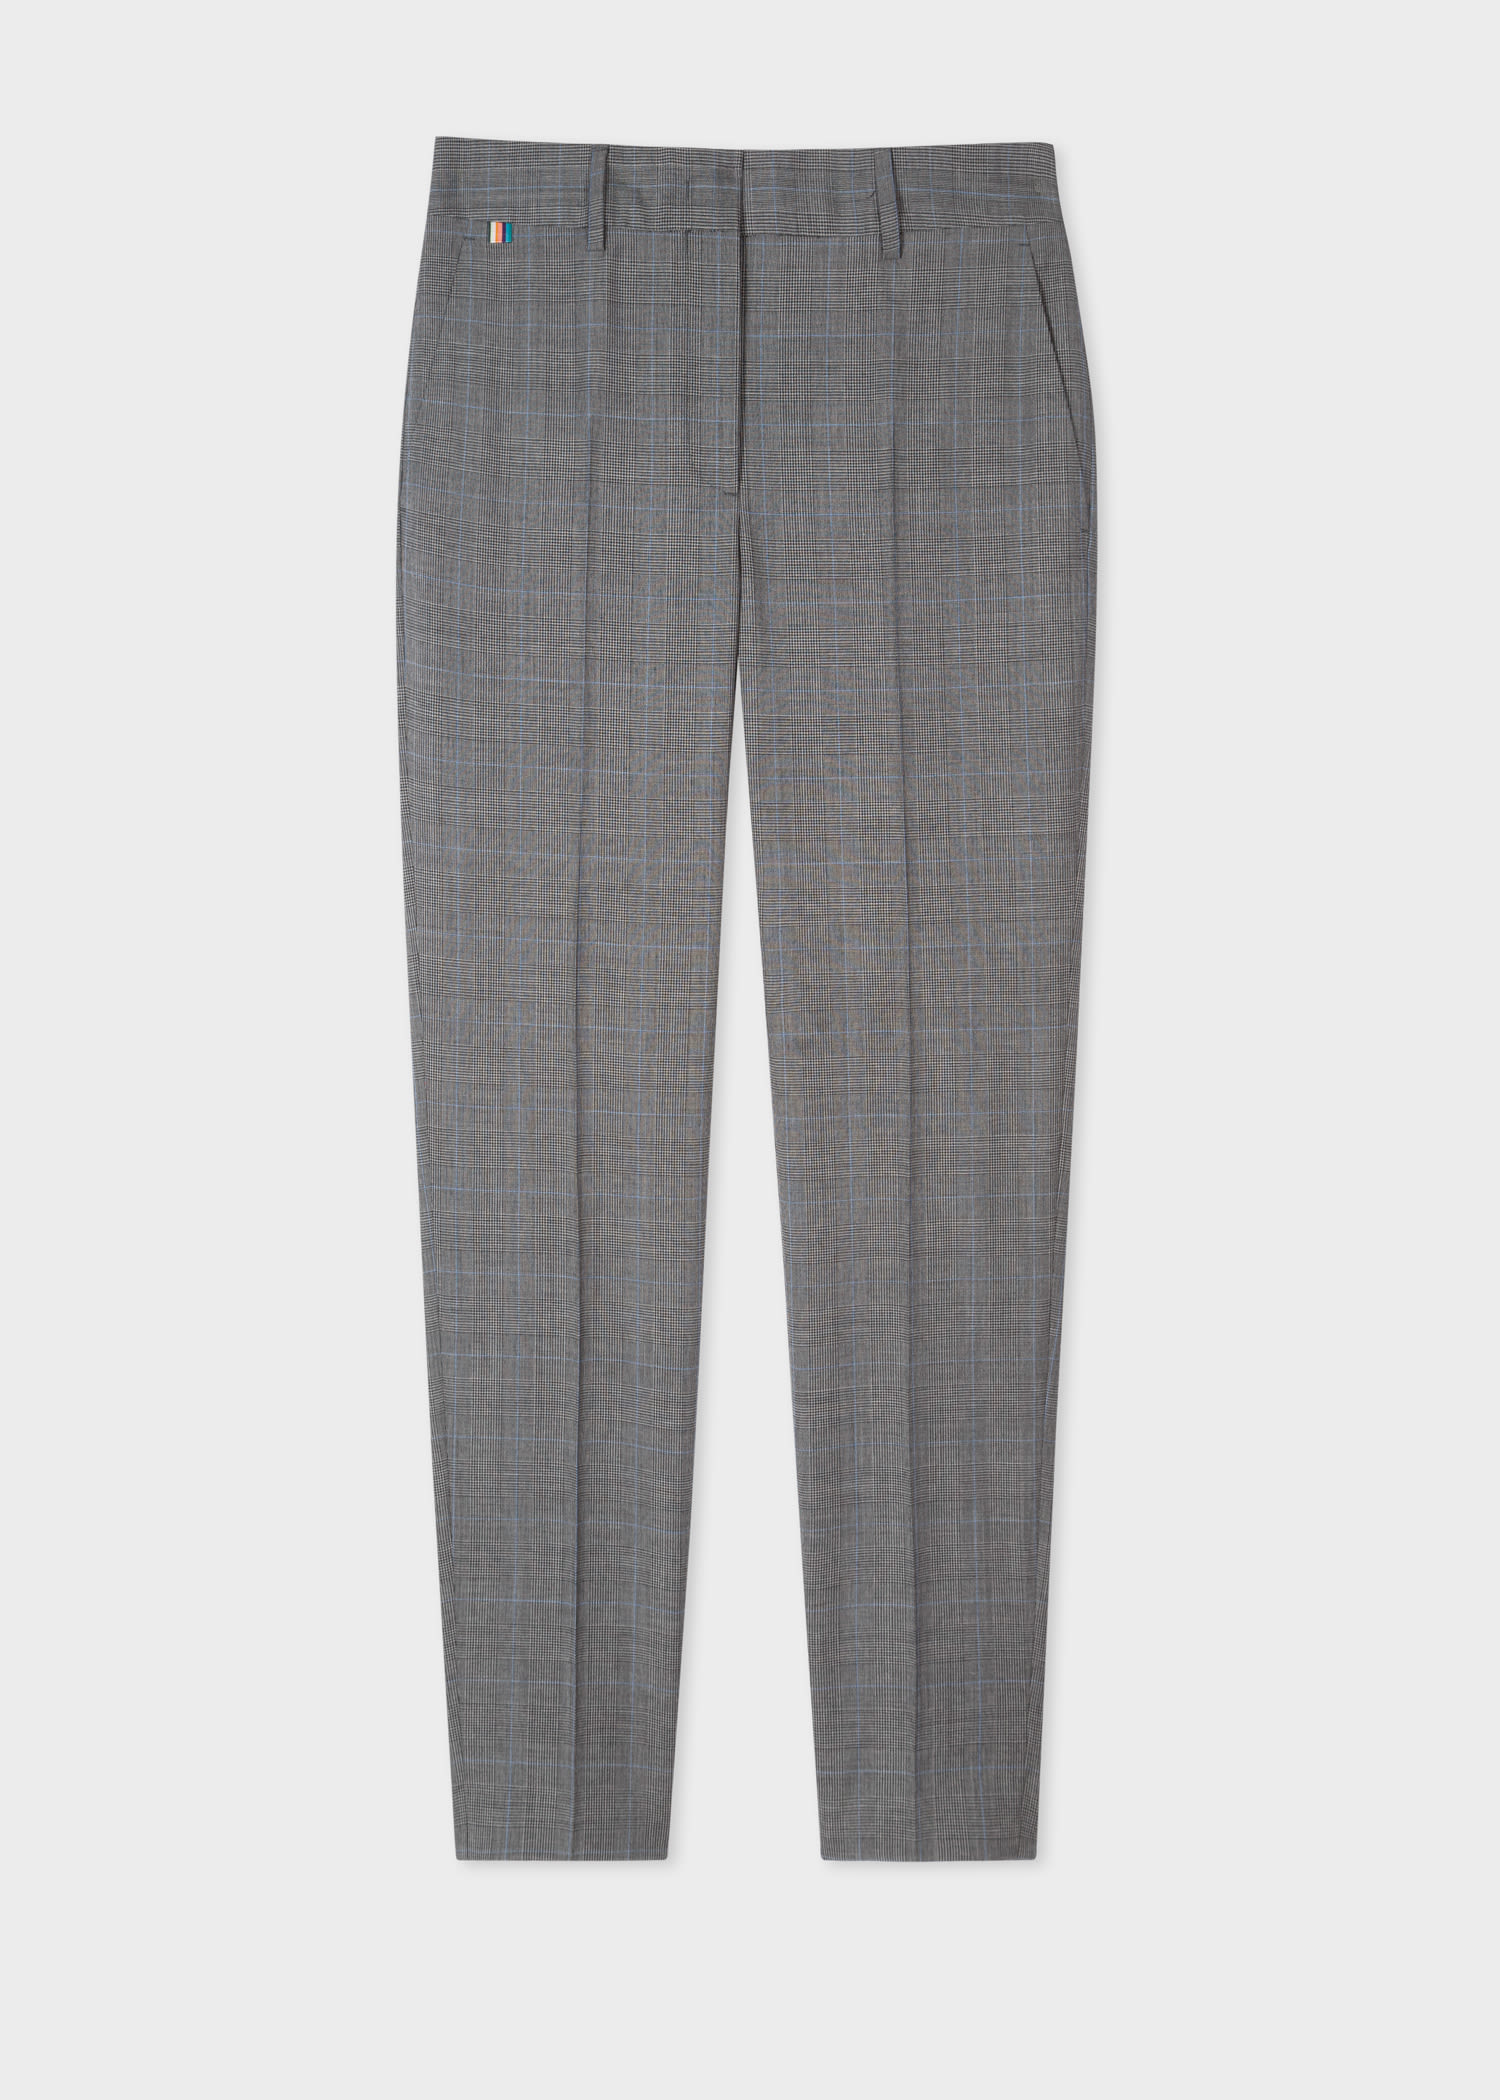 Paul Smith fringe check trousers 2015ss 超可爱 sandorobotics.com